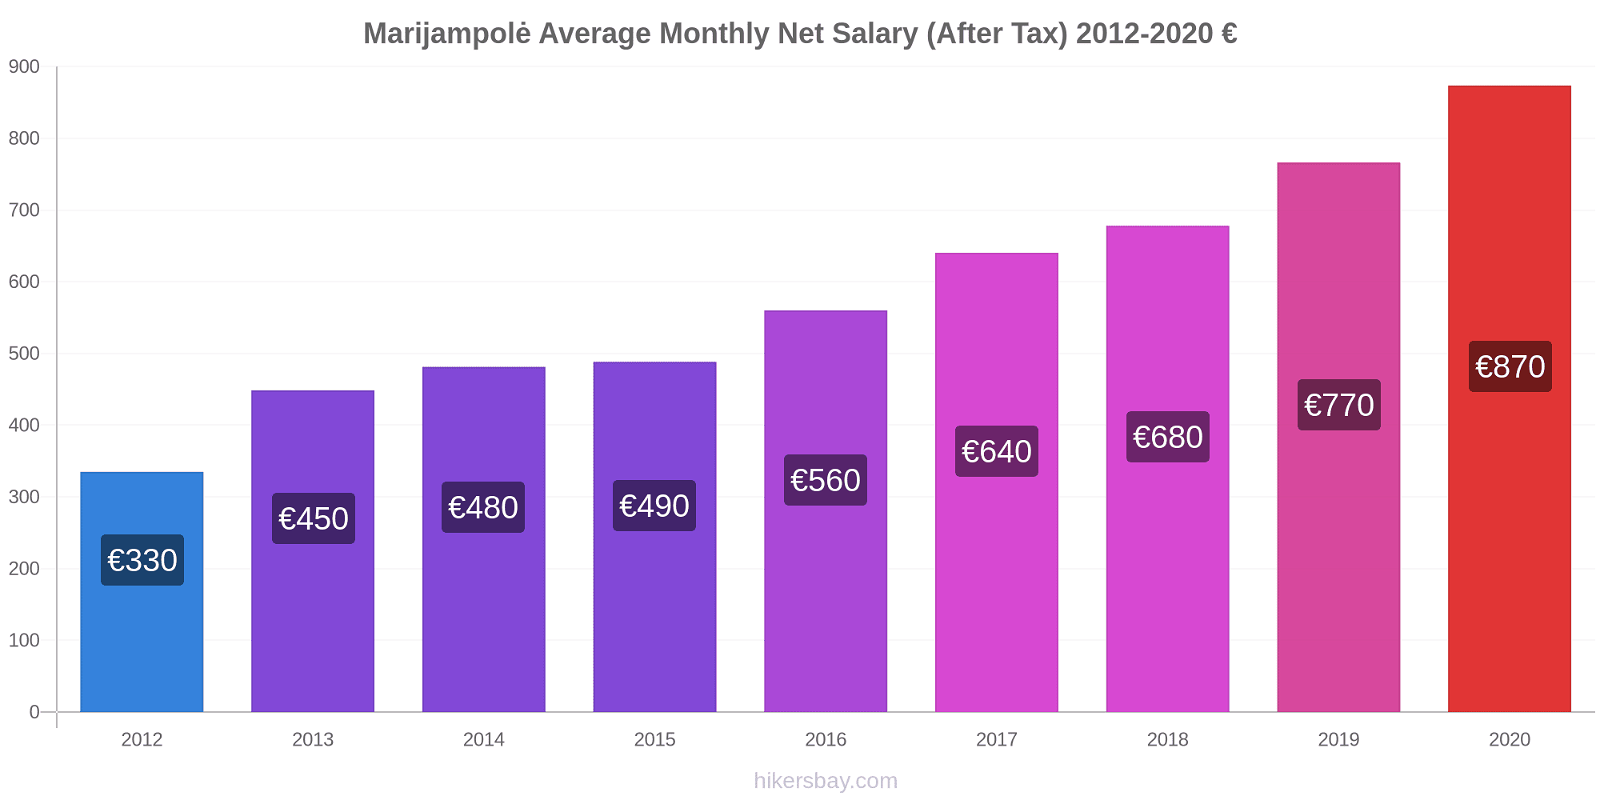 Marijampolė price changes Average Monthly Net Salary (After Tax) hikersbay.com